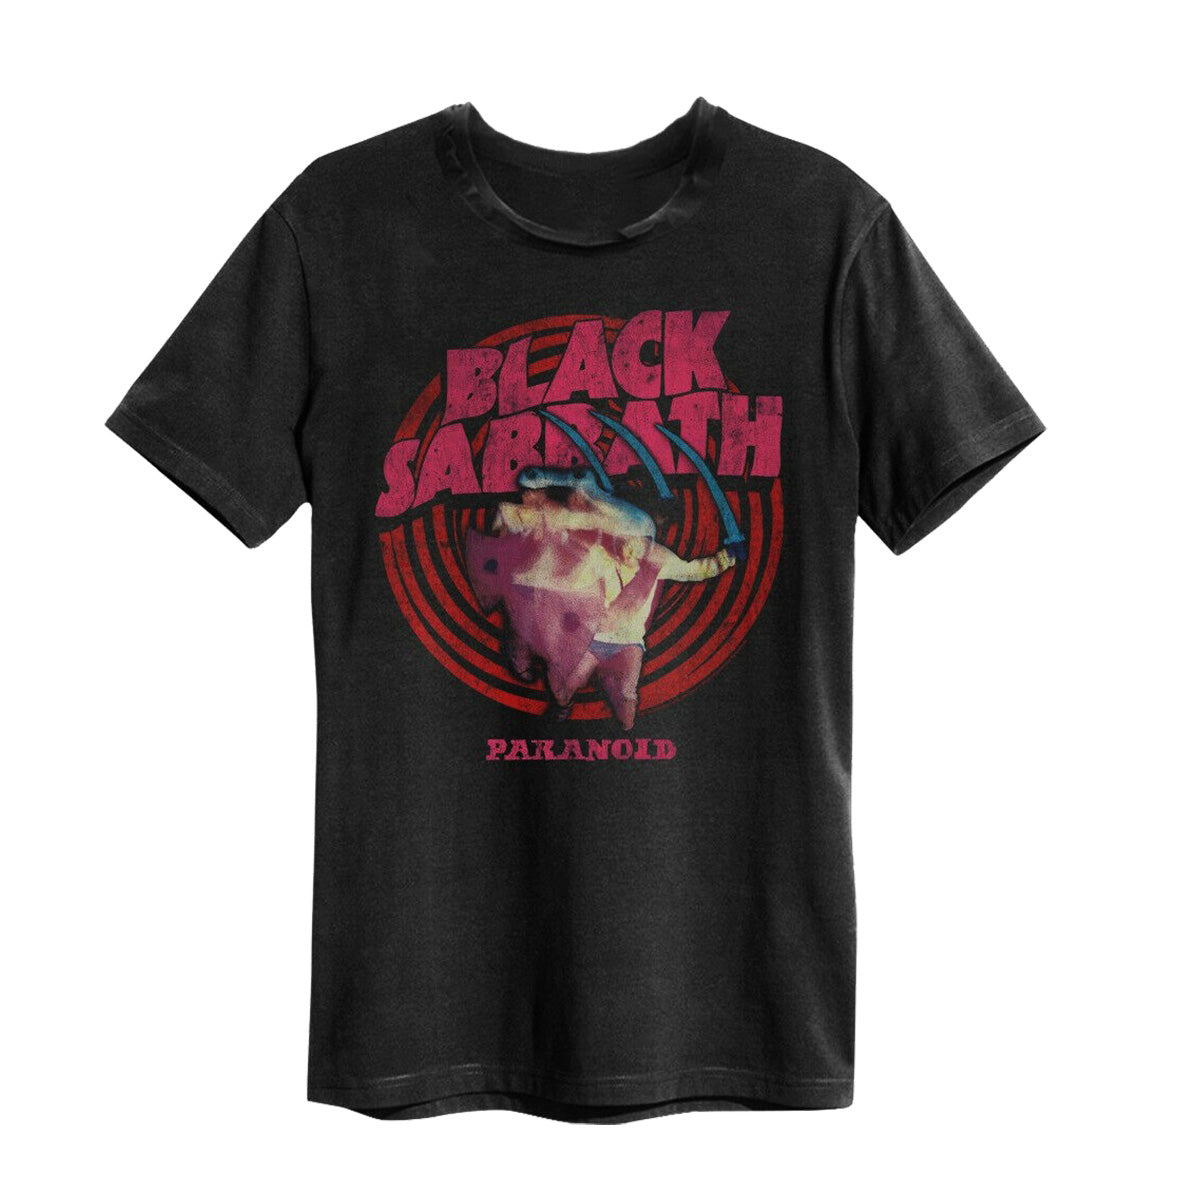 Black Sabbath Paranoid Tee (Charcoal)